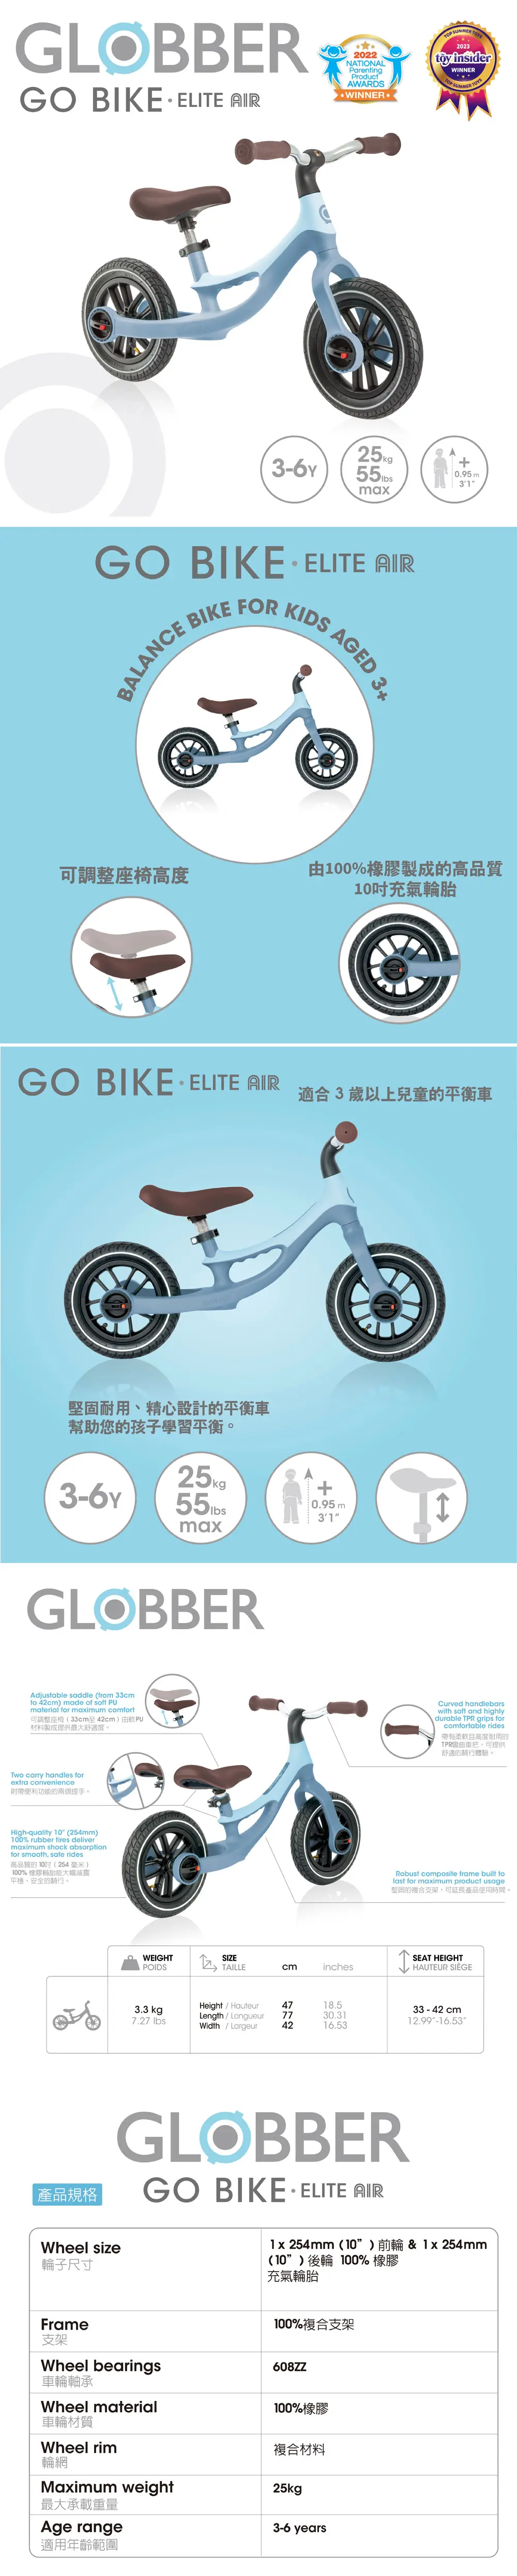 Globber GO Bike Elite Air 幼兒平衡單車